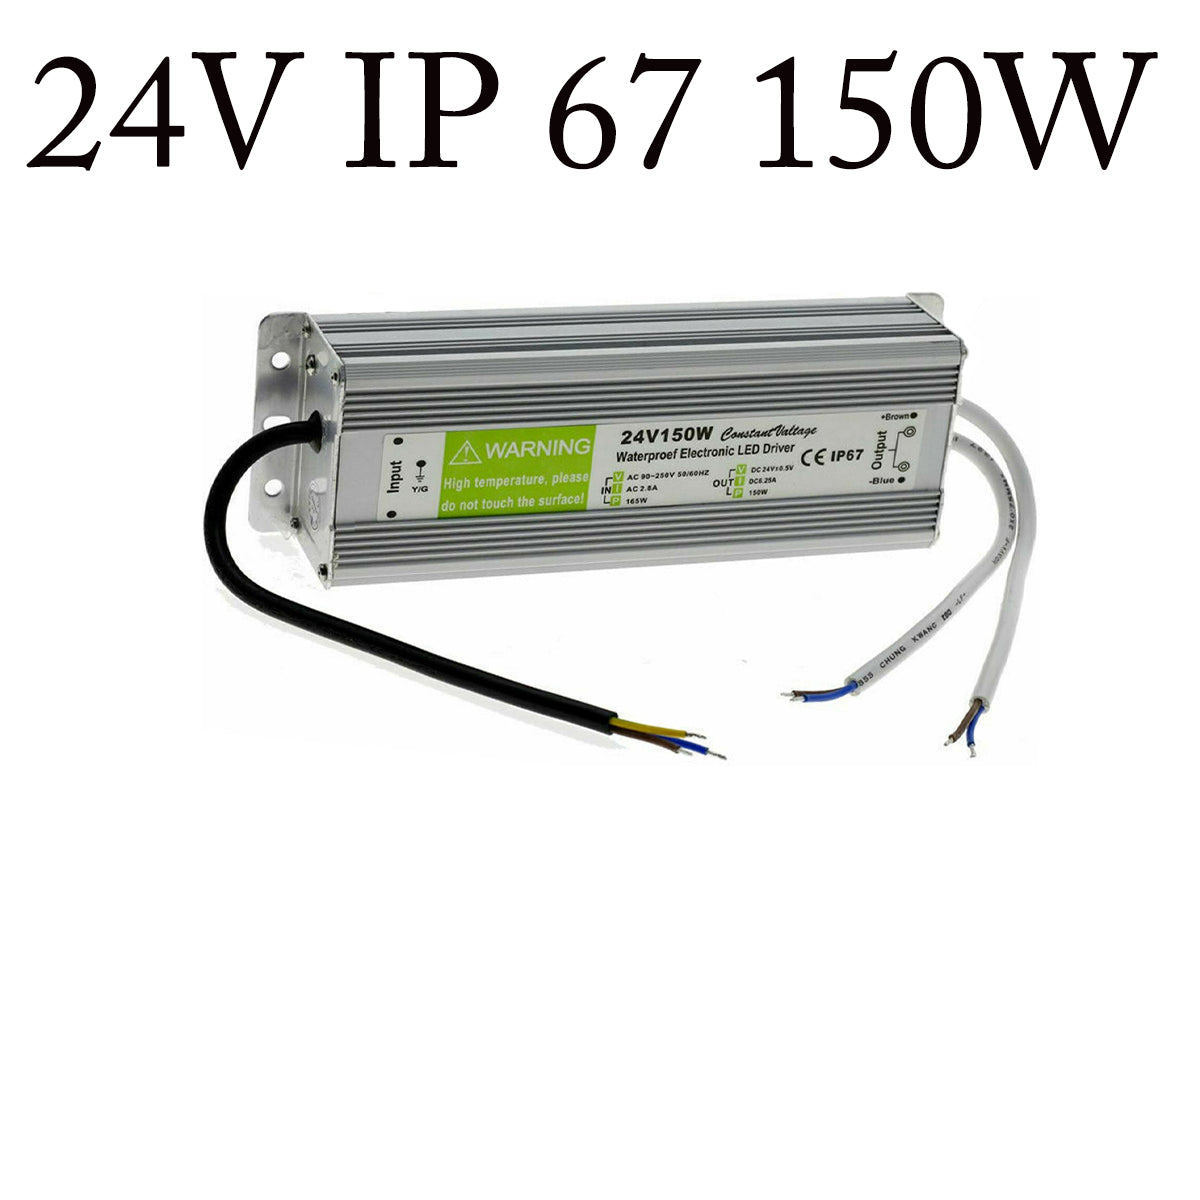 24V LED netzgerat wasserfest treiber 150W DC netzteil~2417